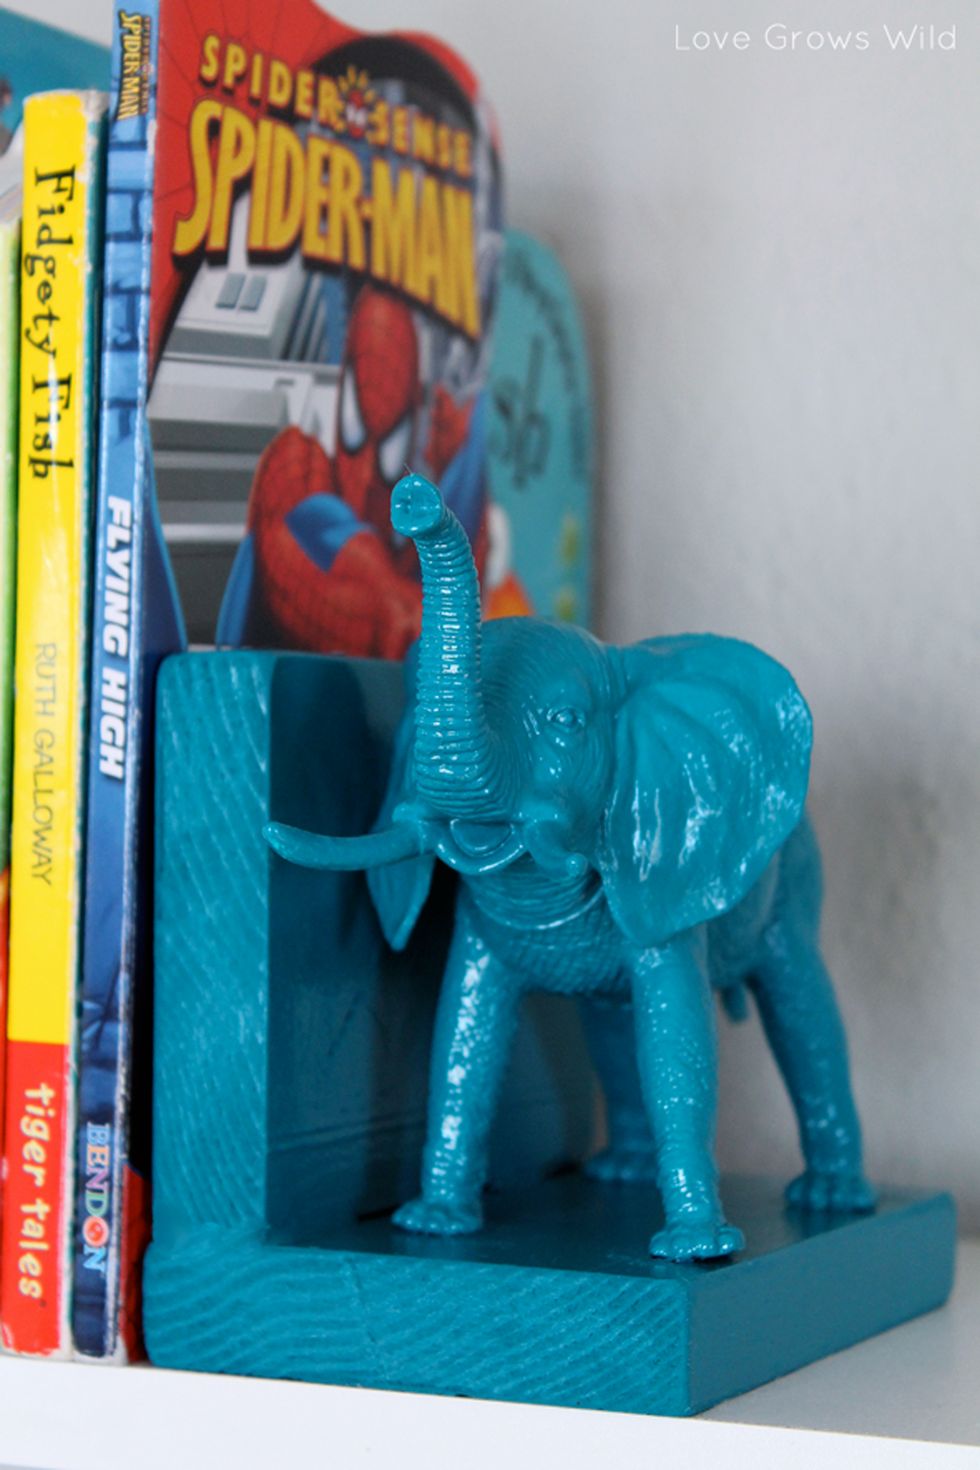 Elephant, Blue, Elephants and Mammoths, Vertebrate, Indian elephant, Toy, Teal, Electric blue, African elephant, Sculpture, 